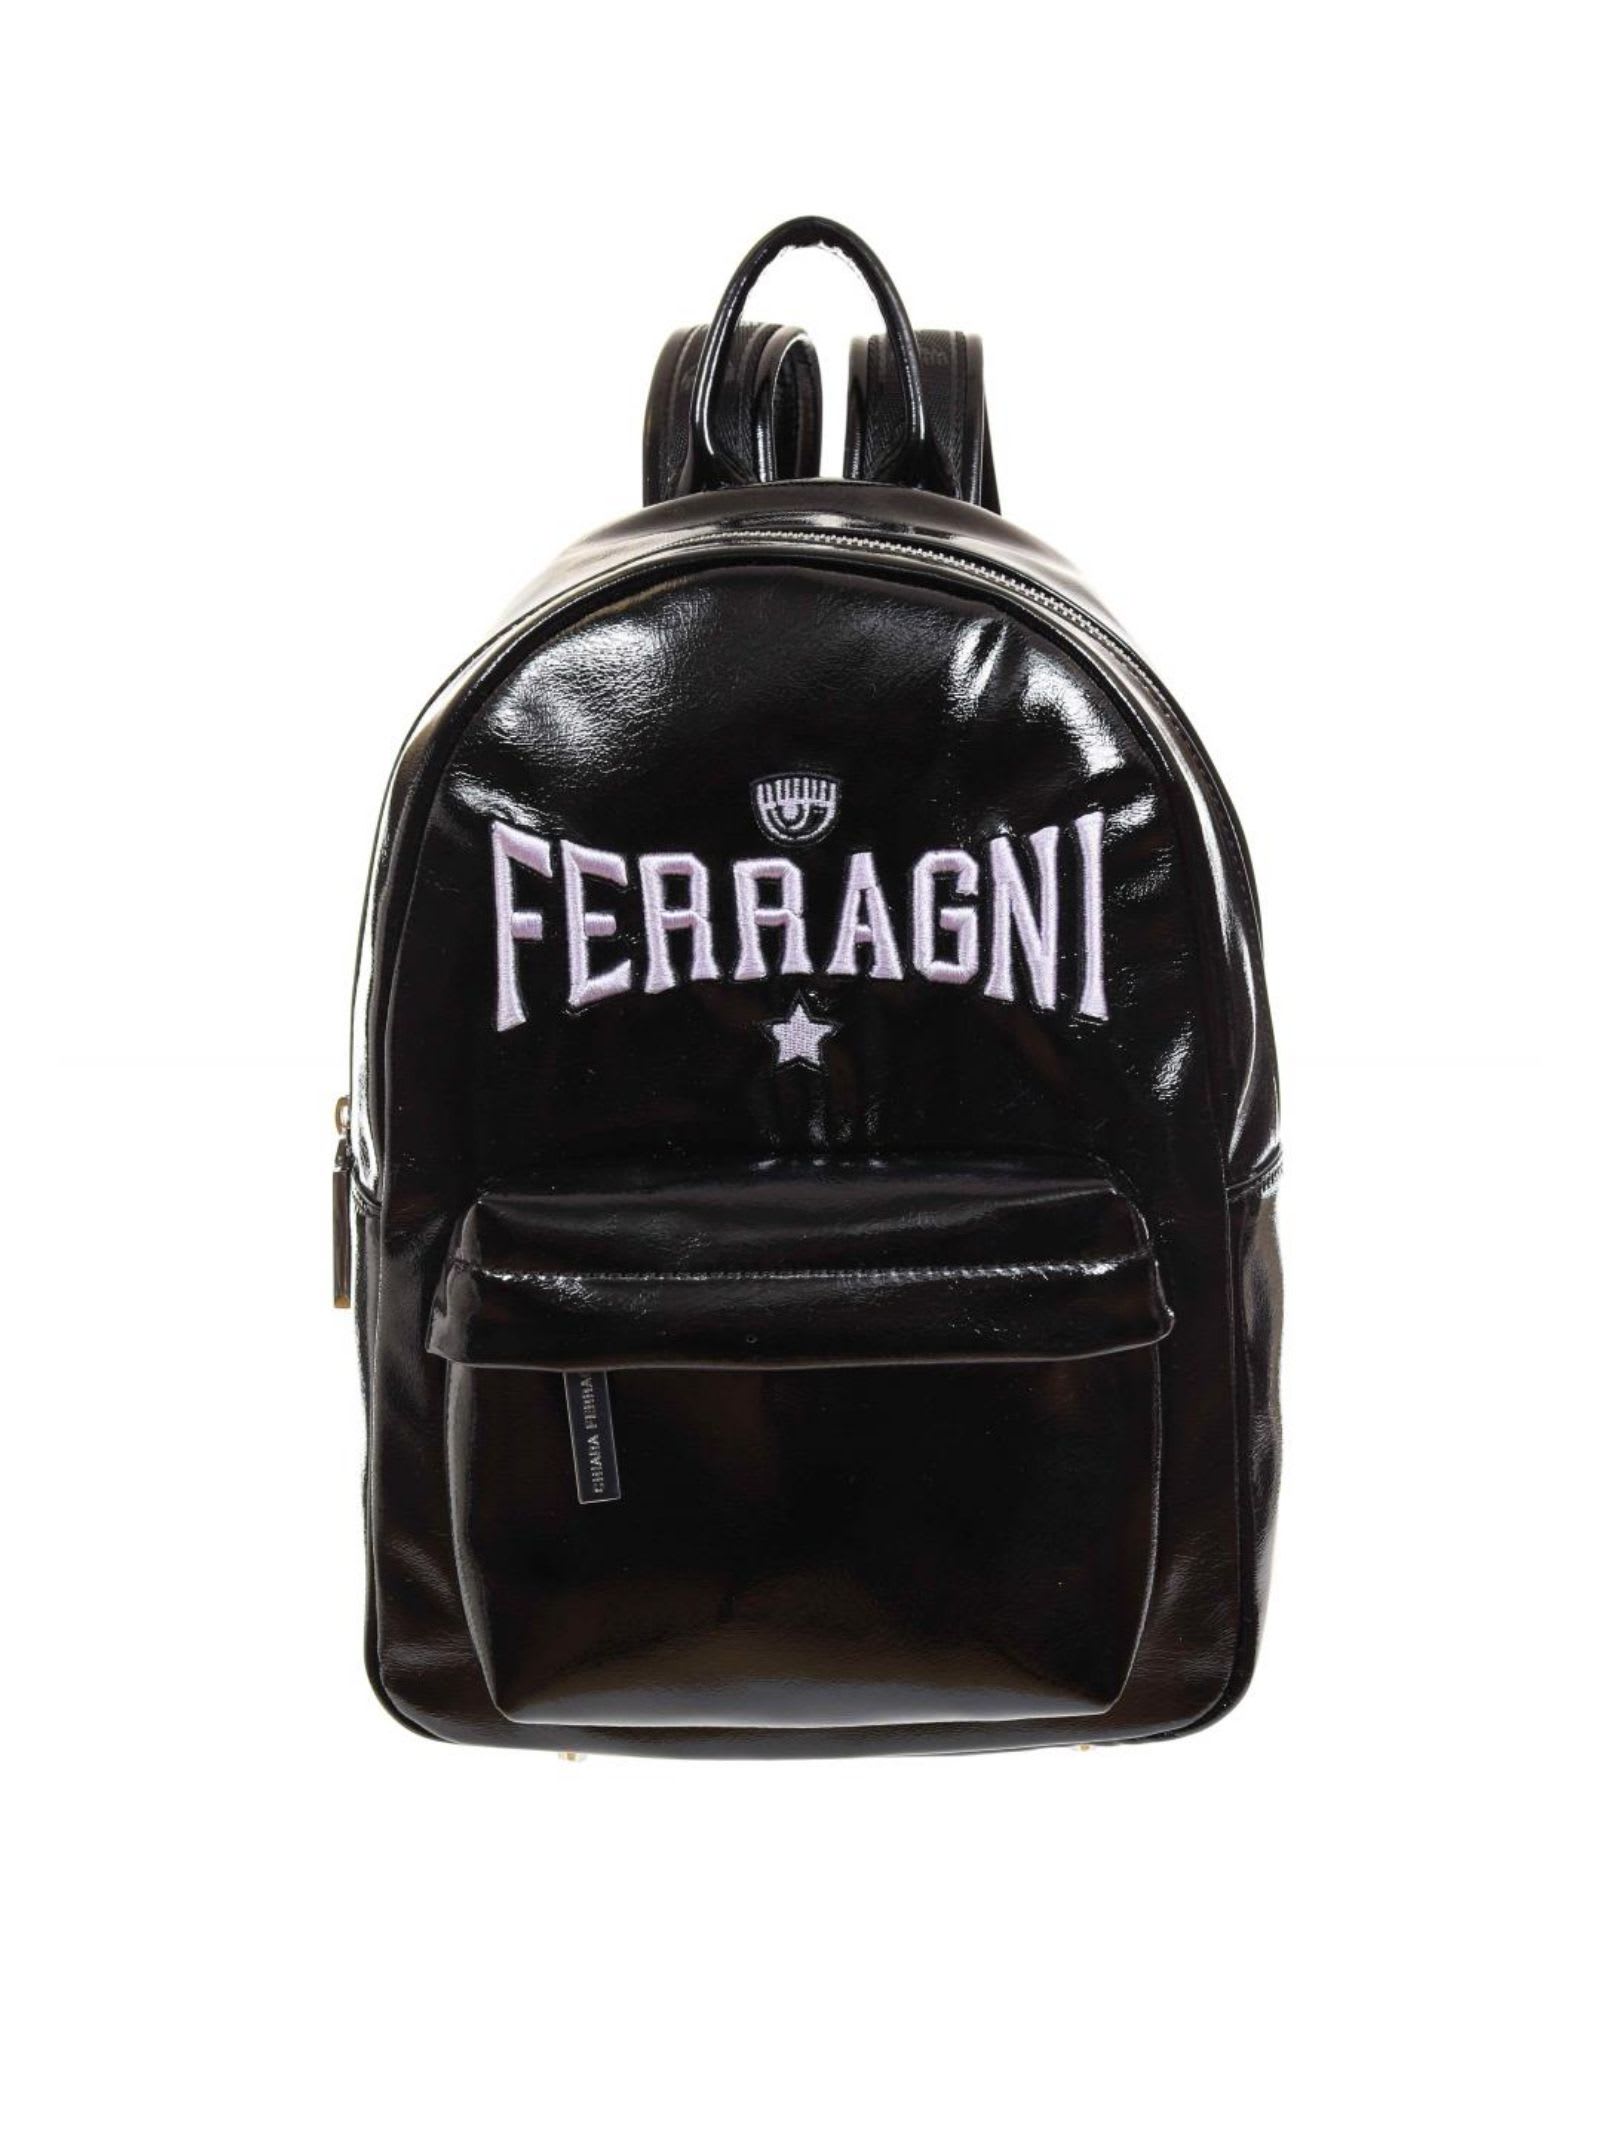 Chiara Ferragni Bag